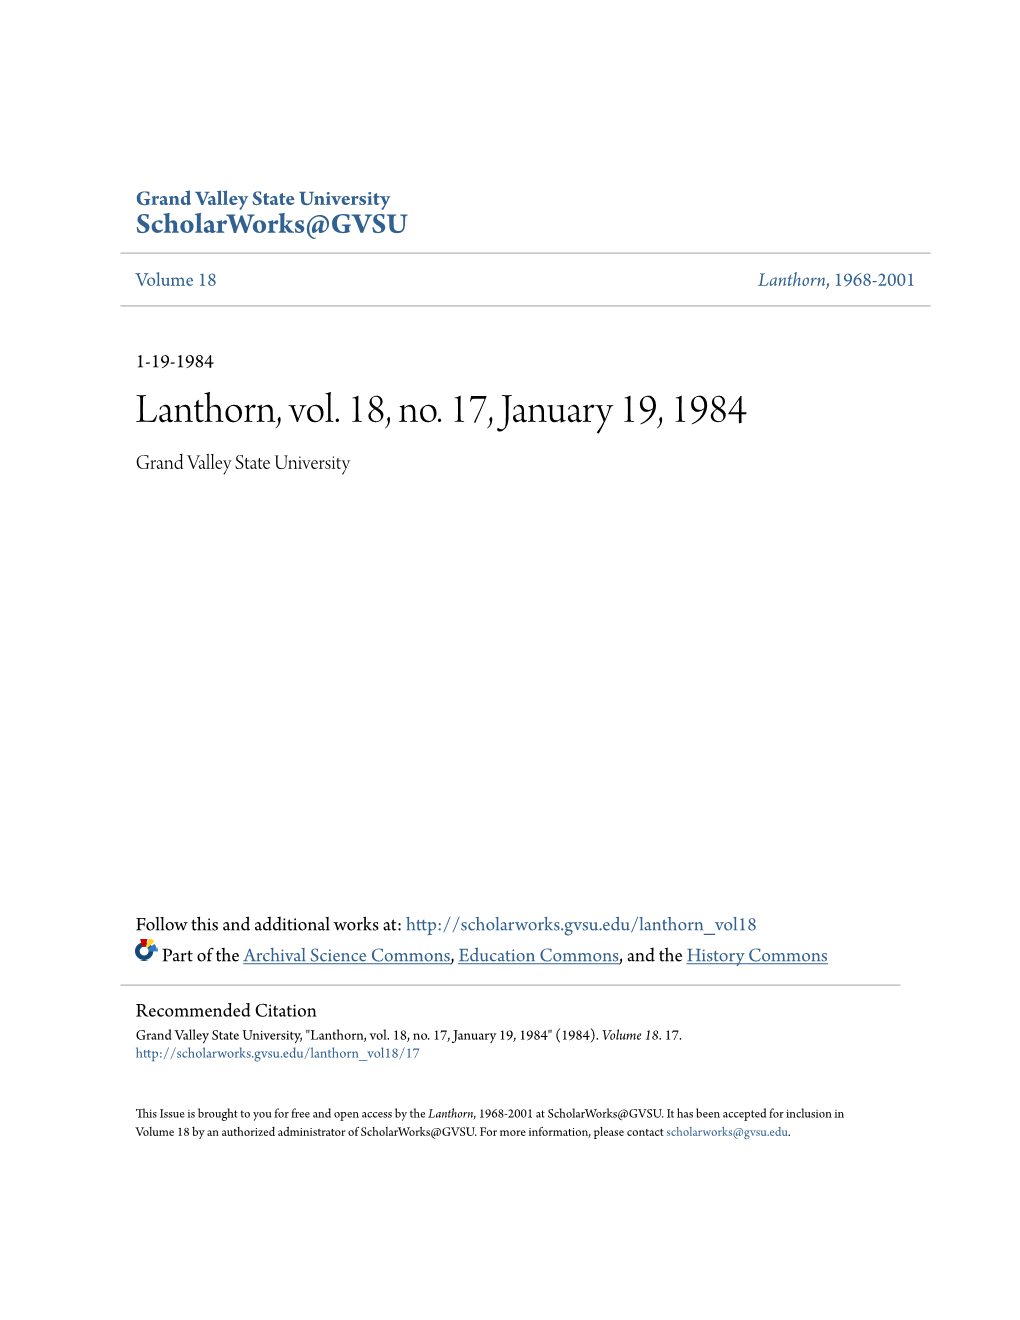 Lanthorn, Vol. 18, No. 17, January 19, 1984 Grand Valley State University